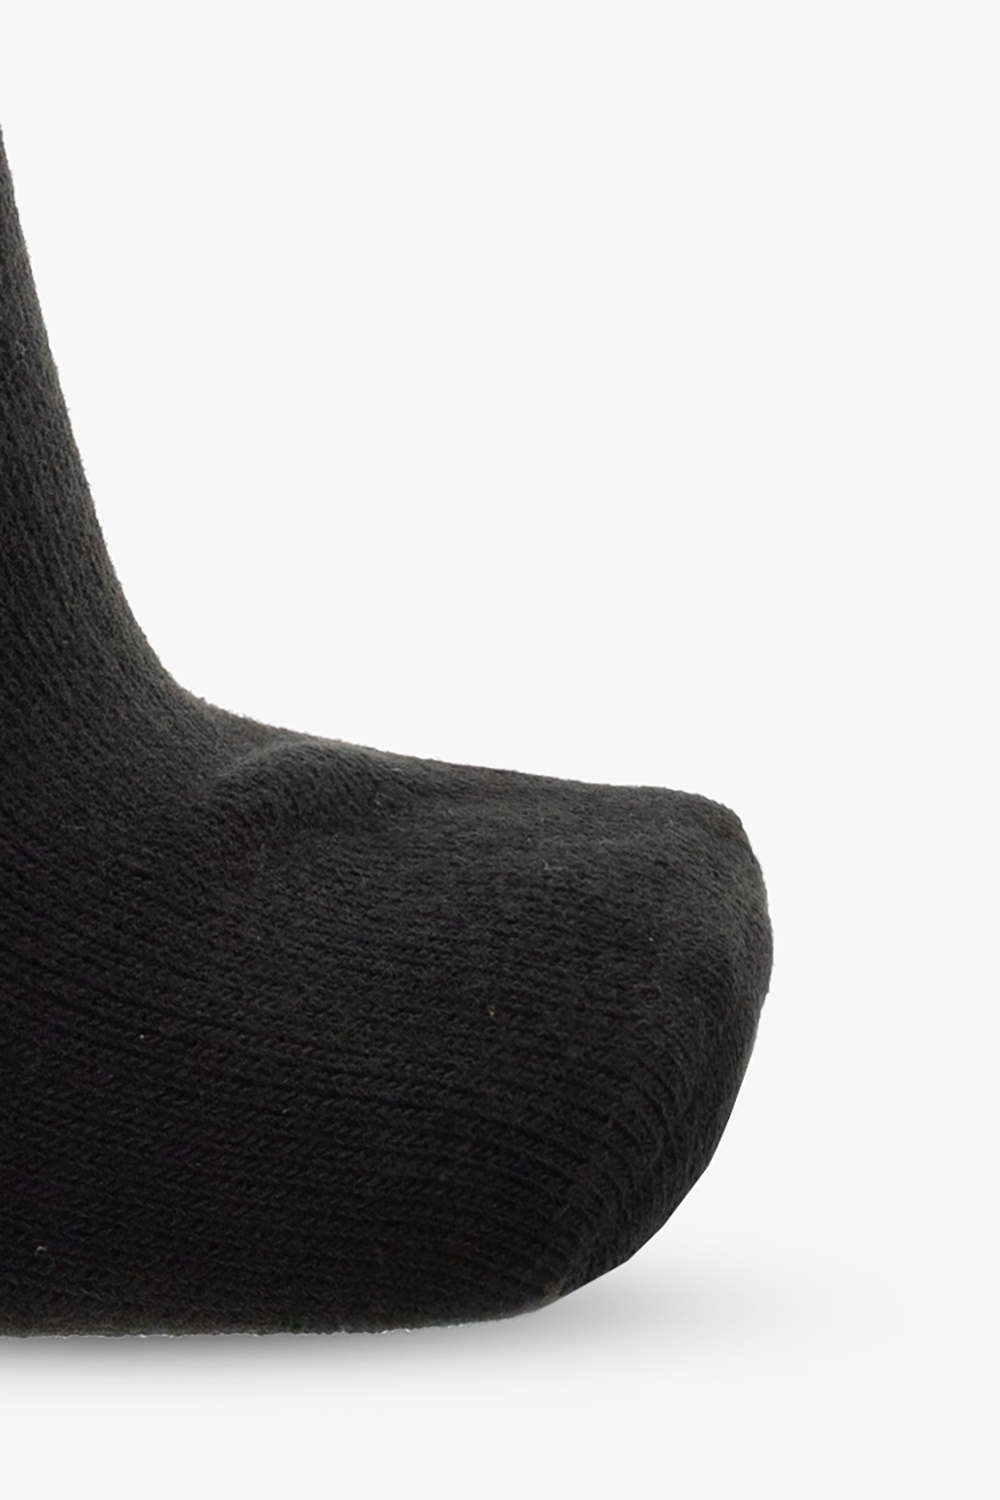 Lacoste Socks three-pack